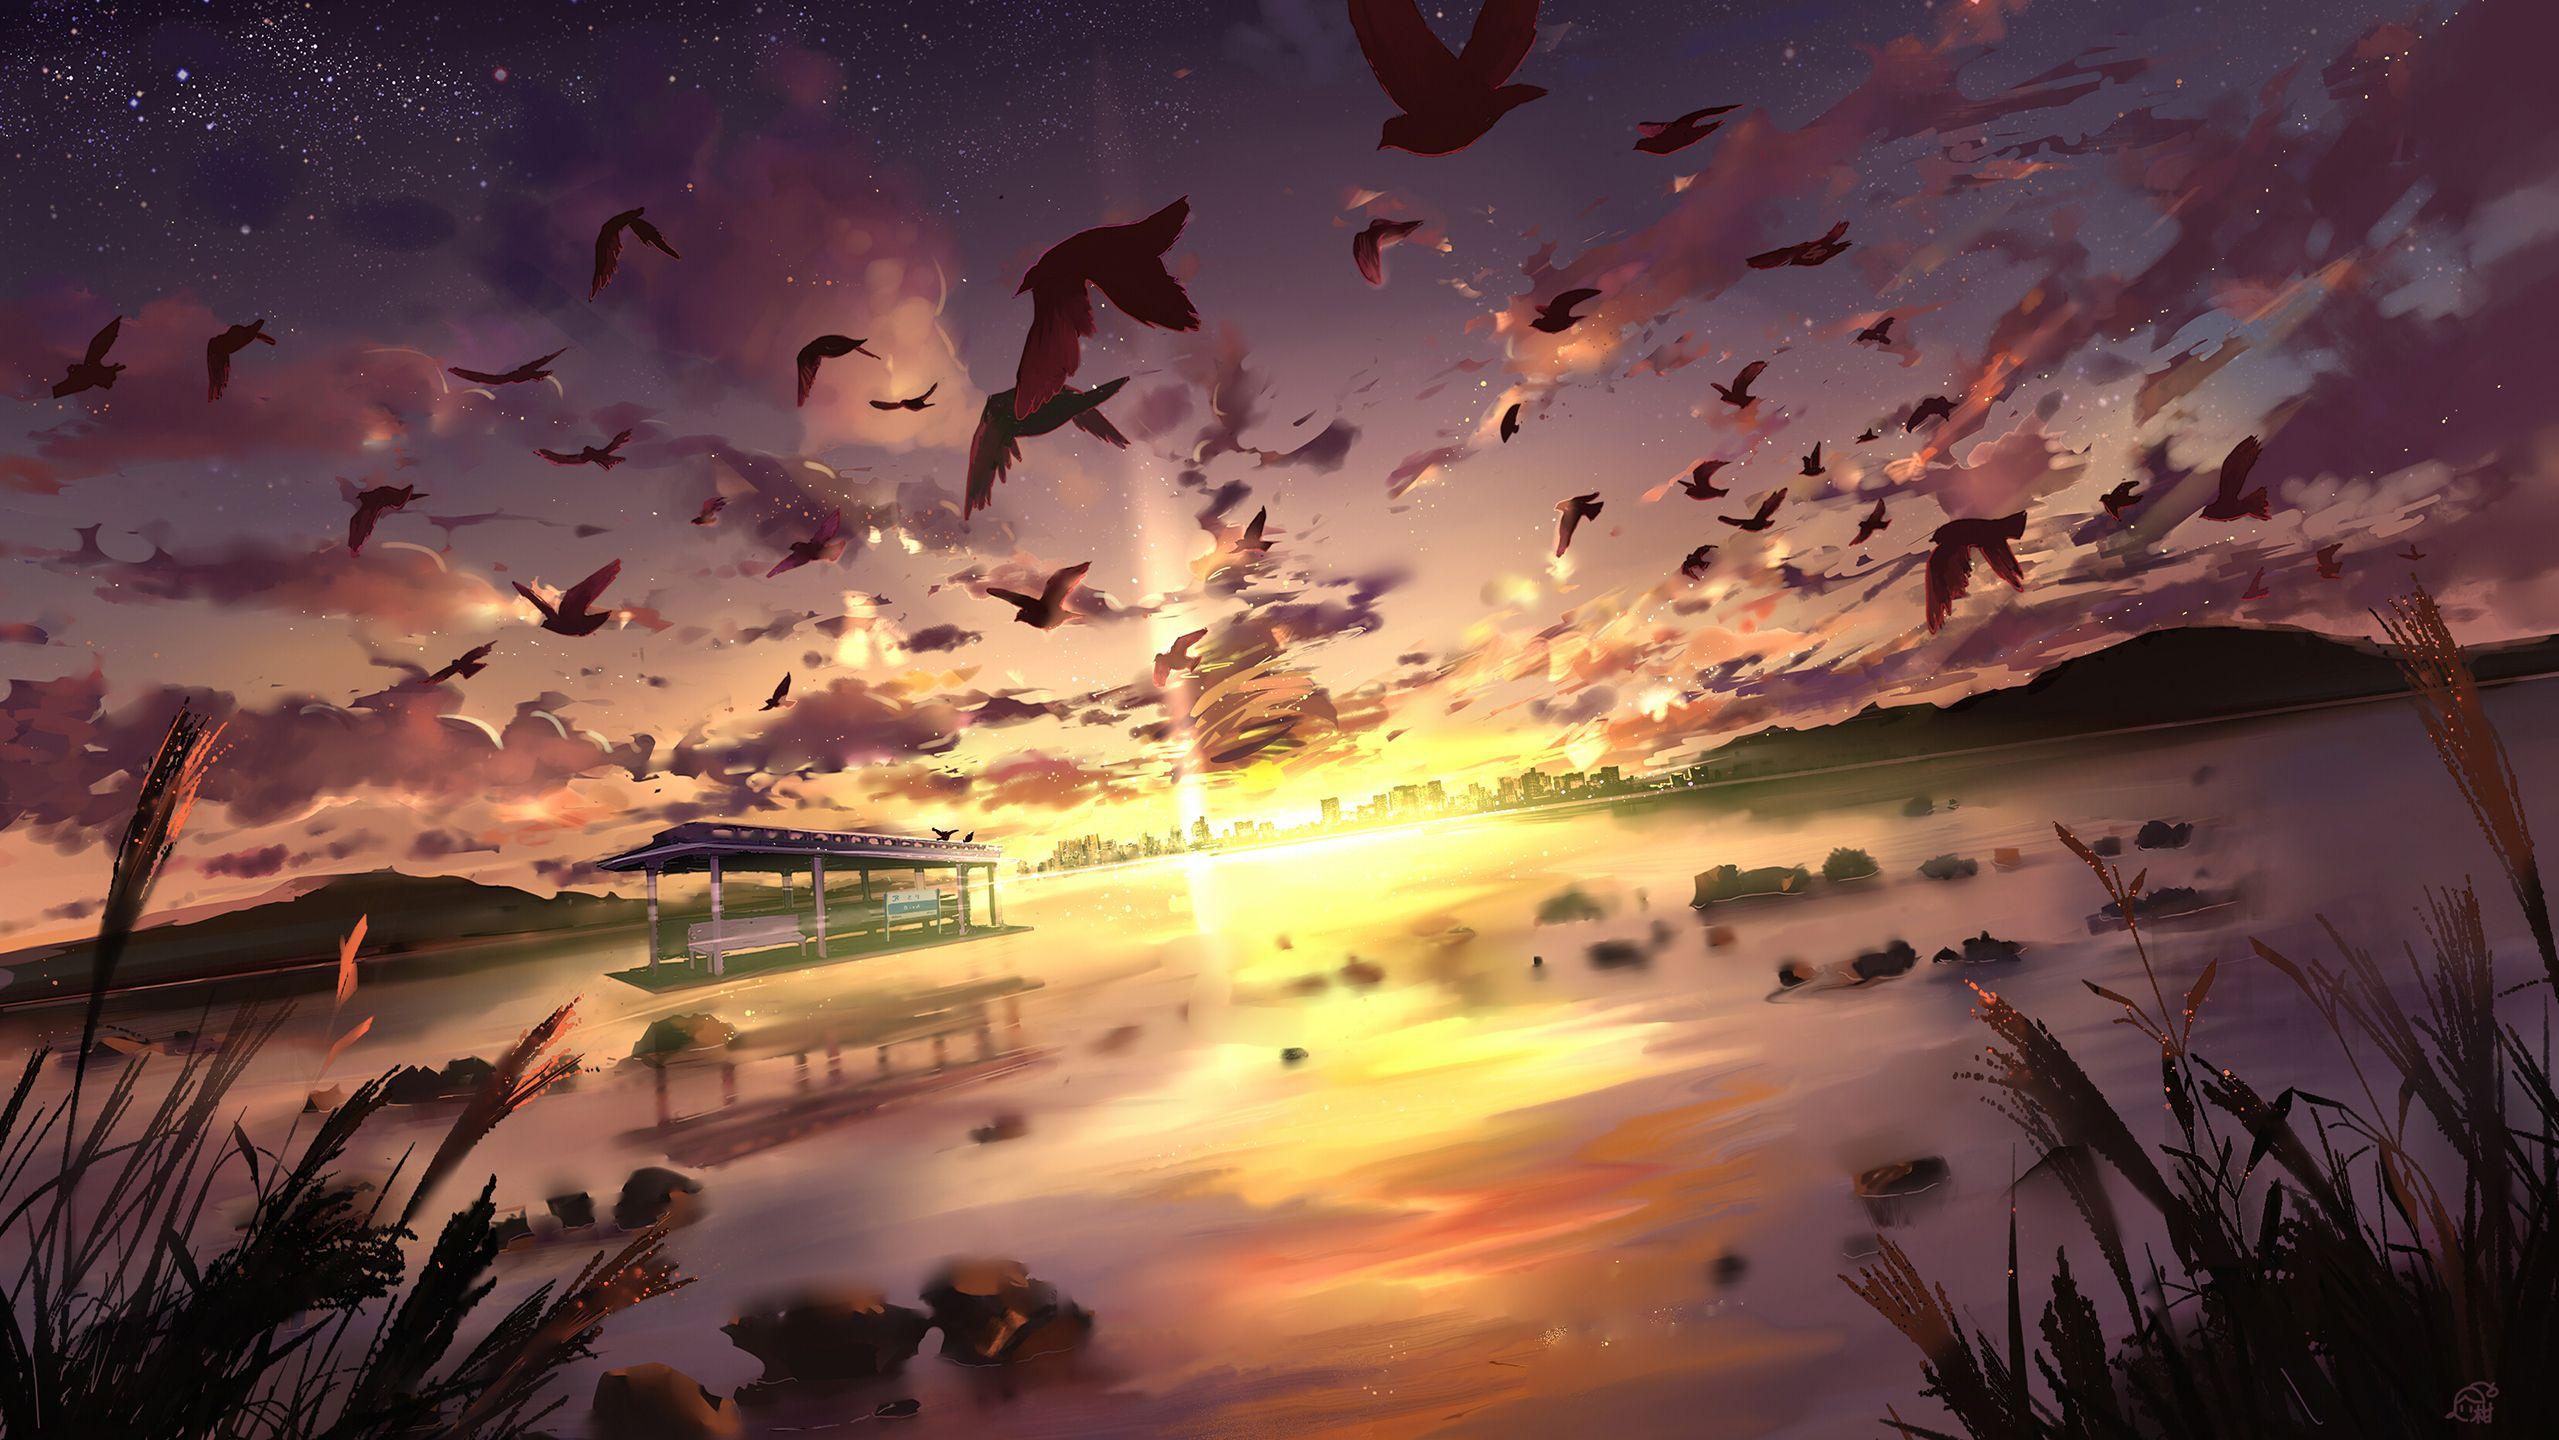 Beautiful Anime Scenery Wallpapers - Top Free Beautiful ...